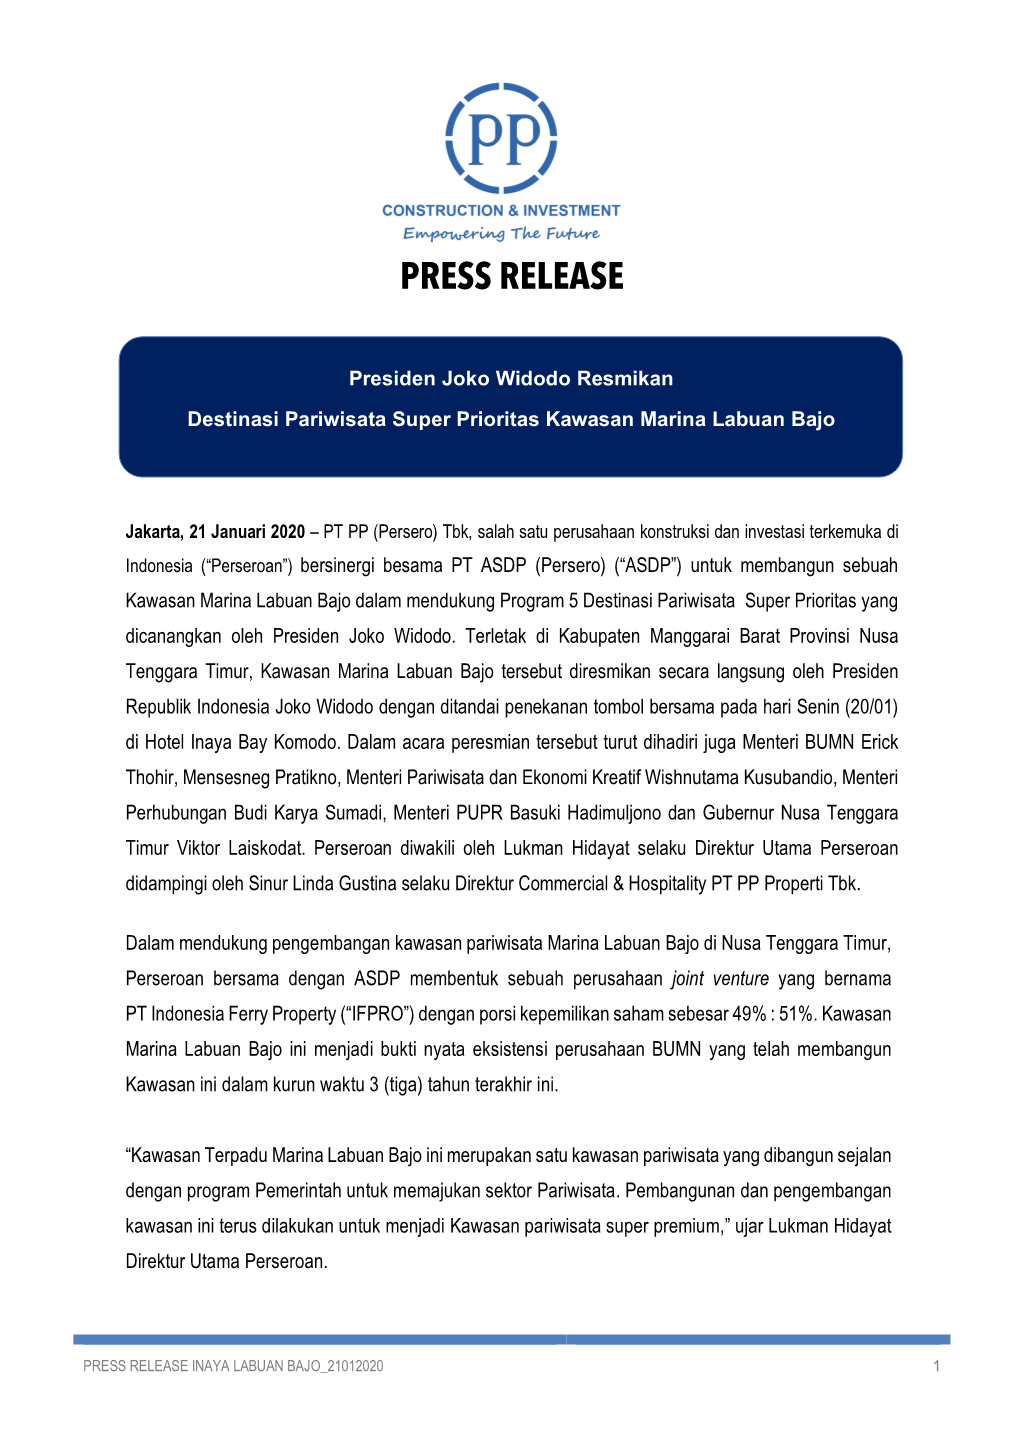 02. Press Release Inaya Labuan Bajo 21012020